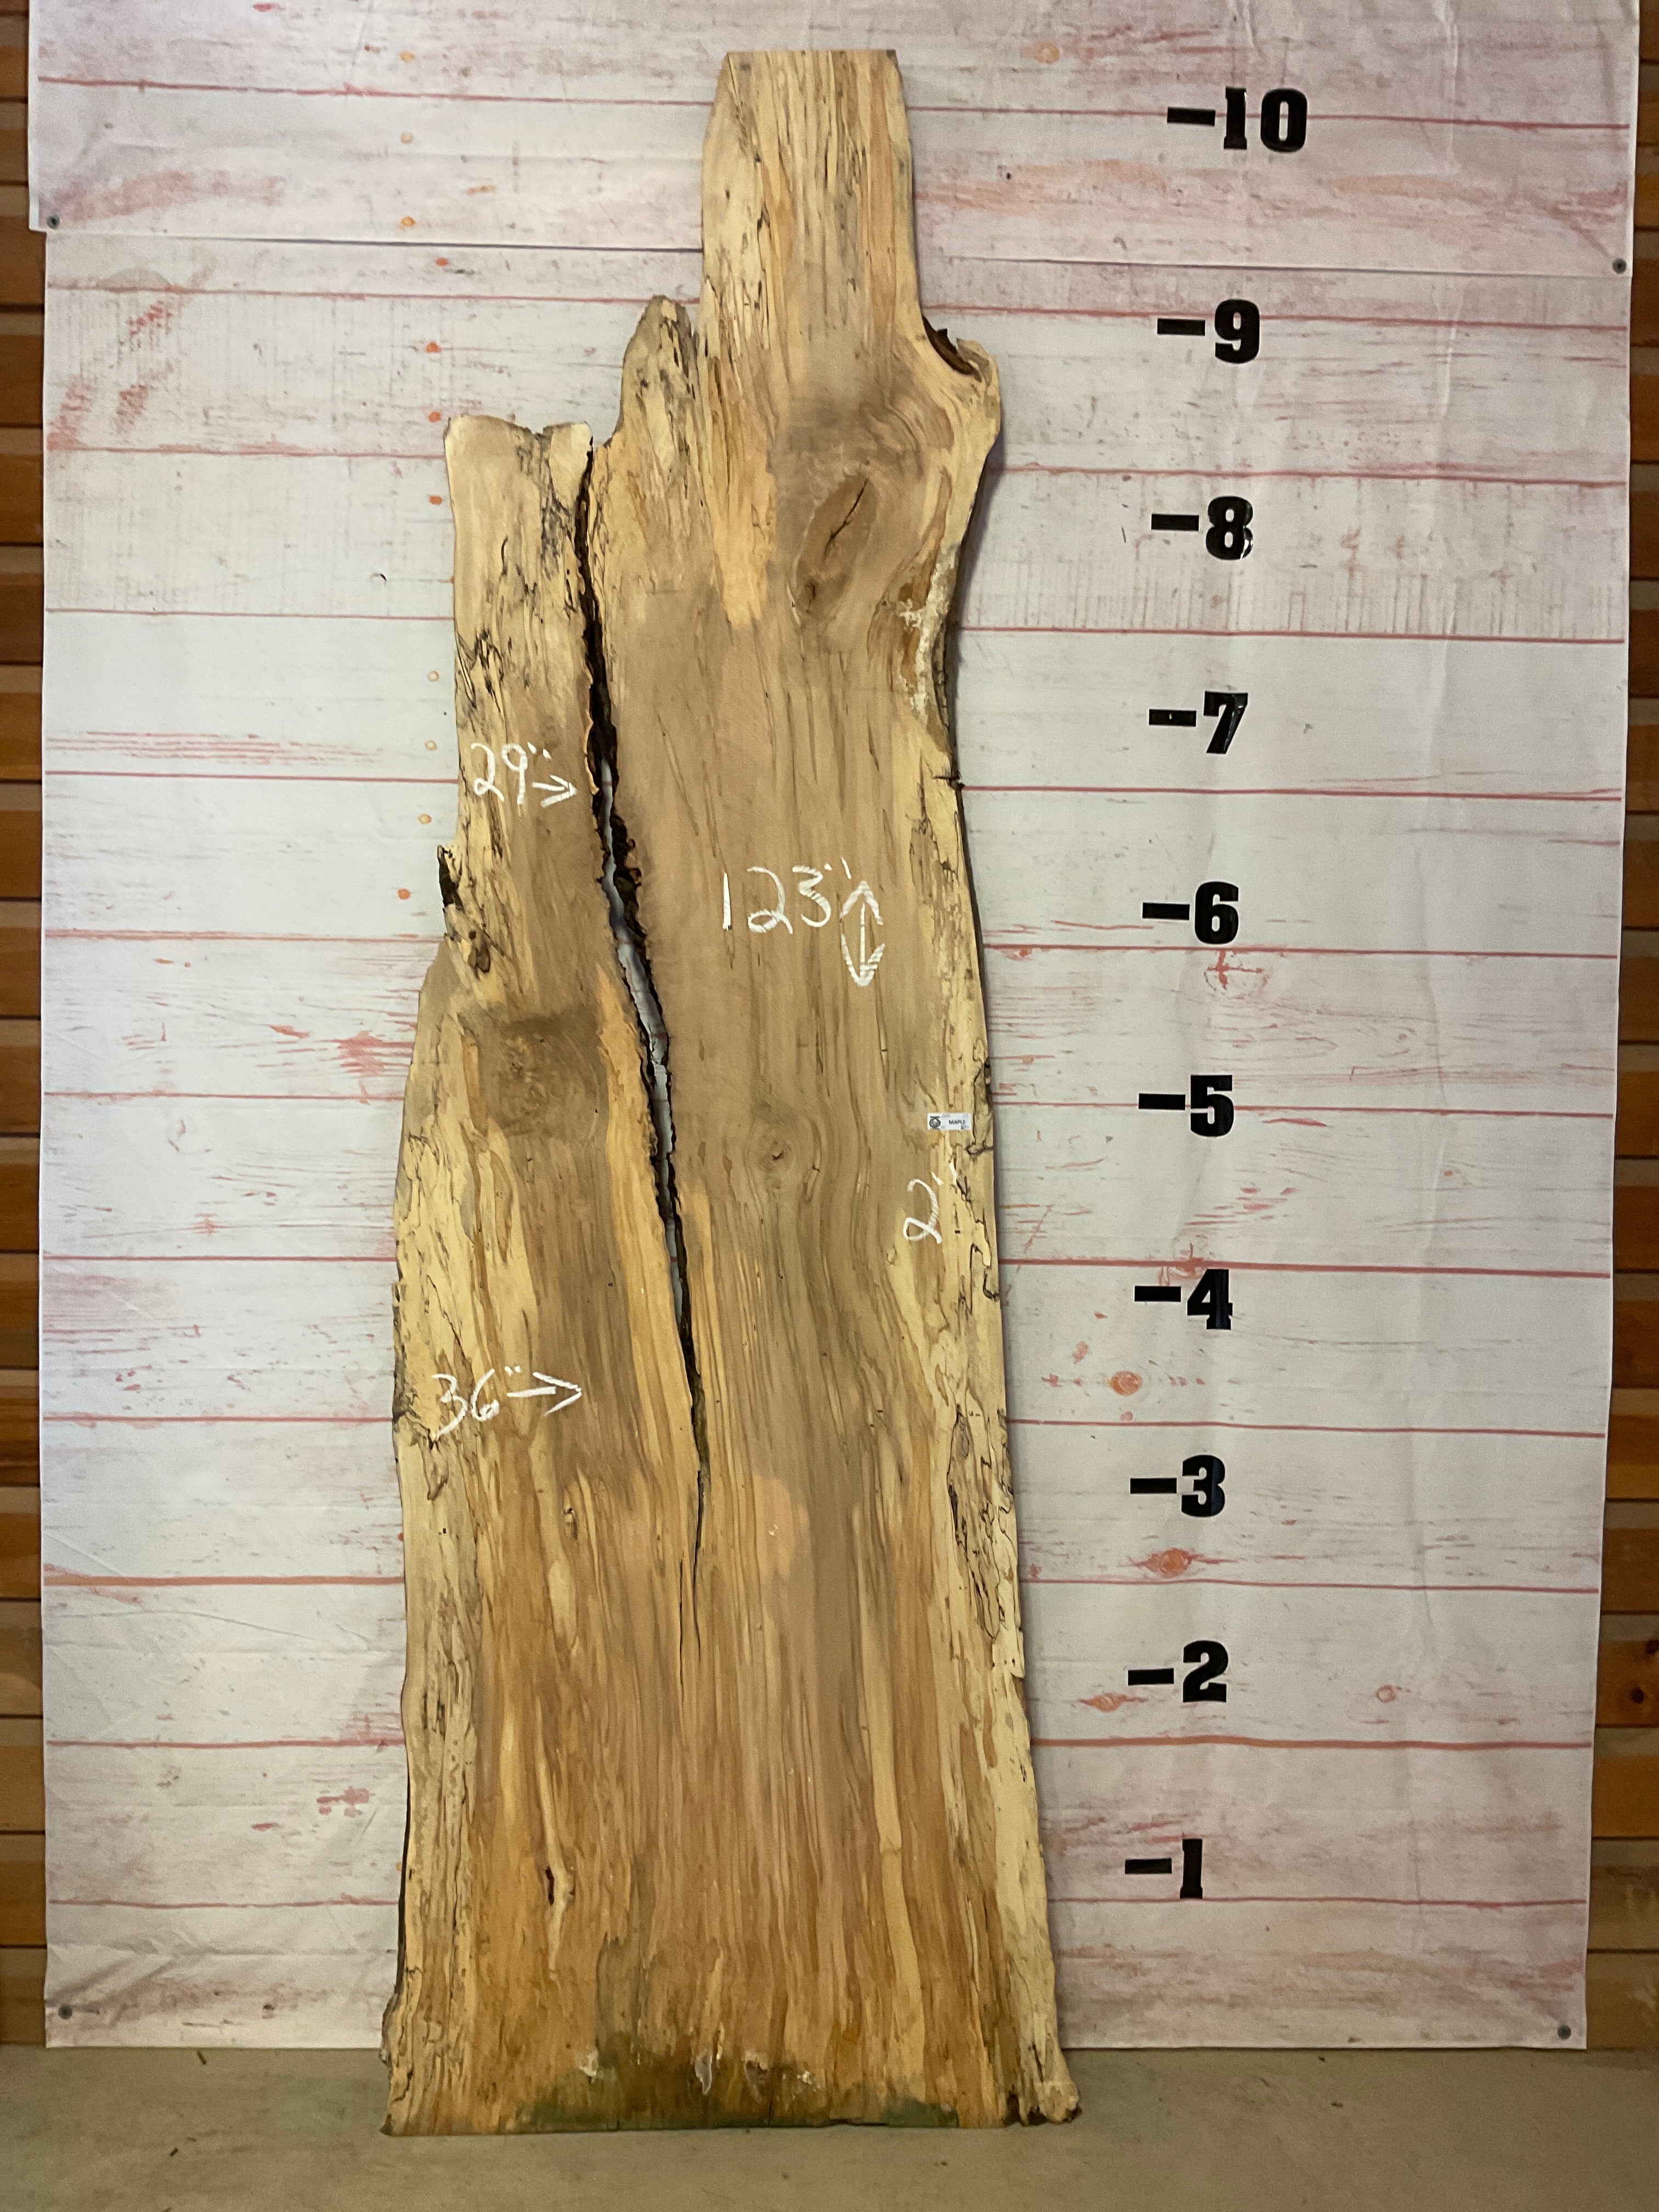 7 Foot 6 Inch Maple Wood Slab Table